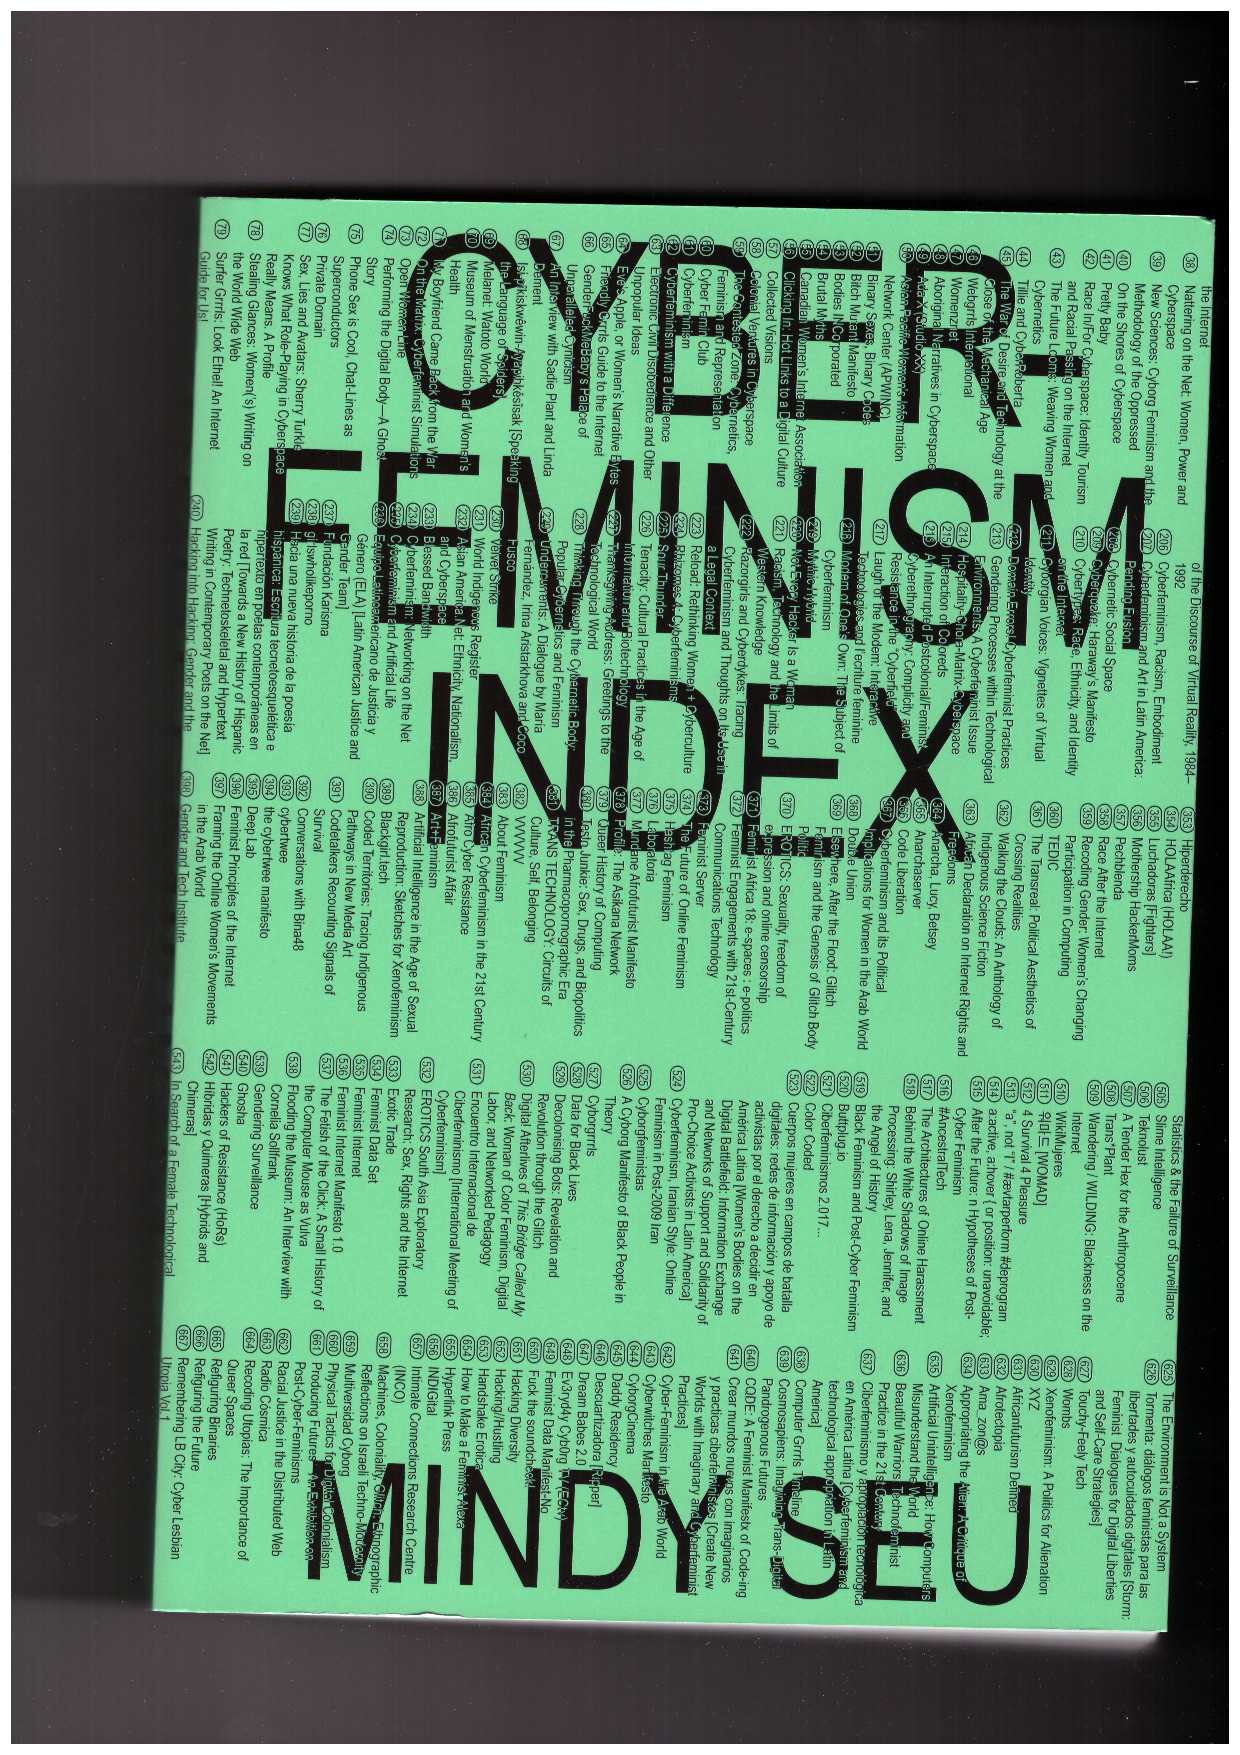 SEU, Mindy (ed.) - Cyberfeminism Index